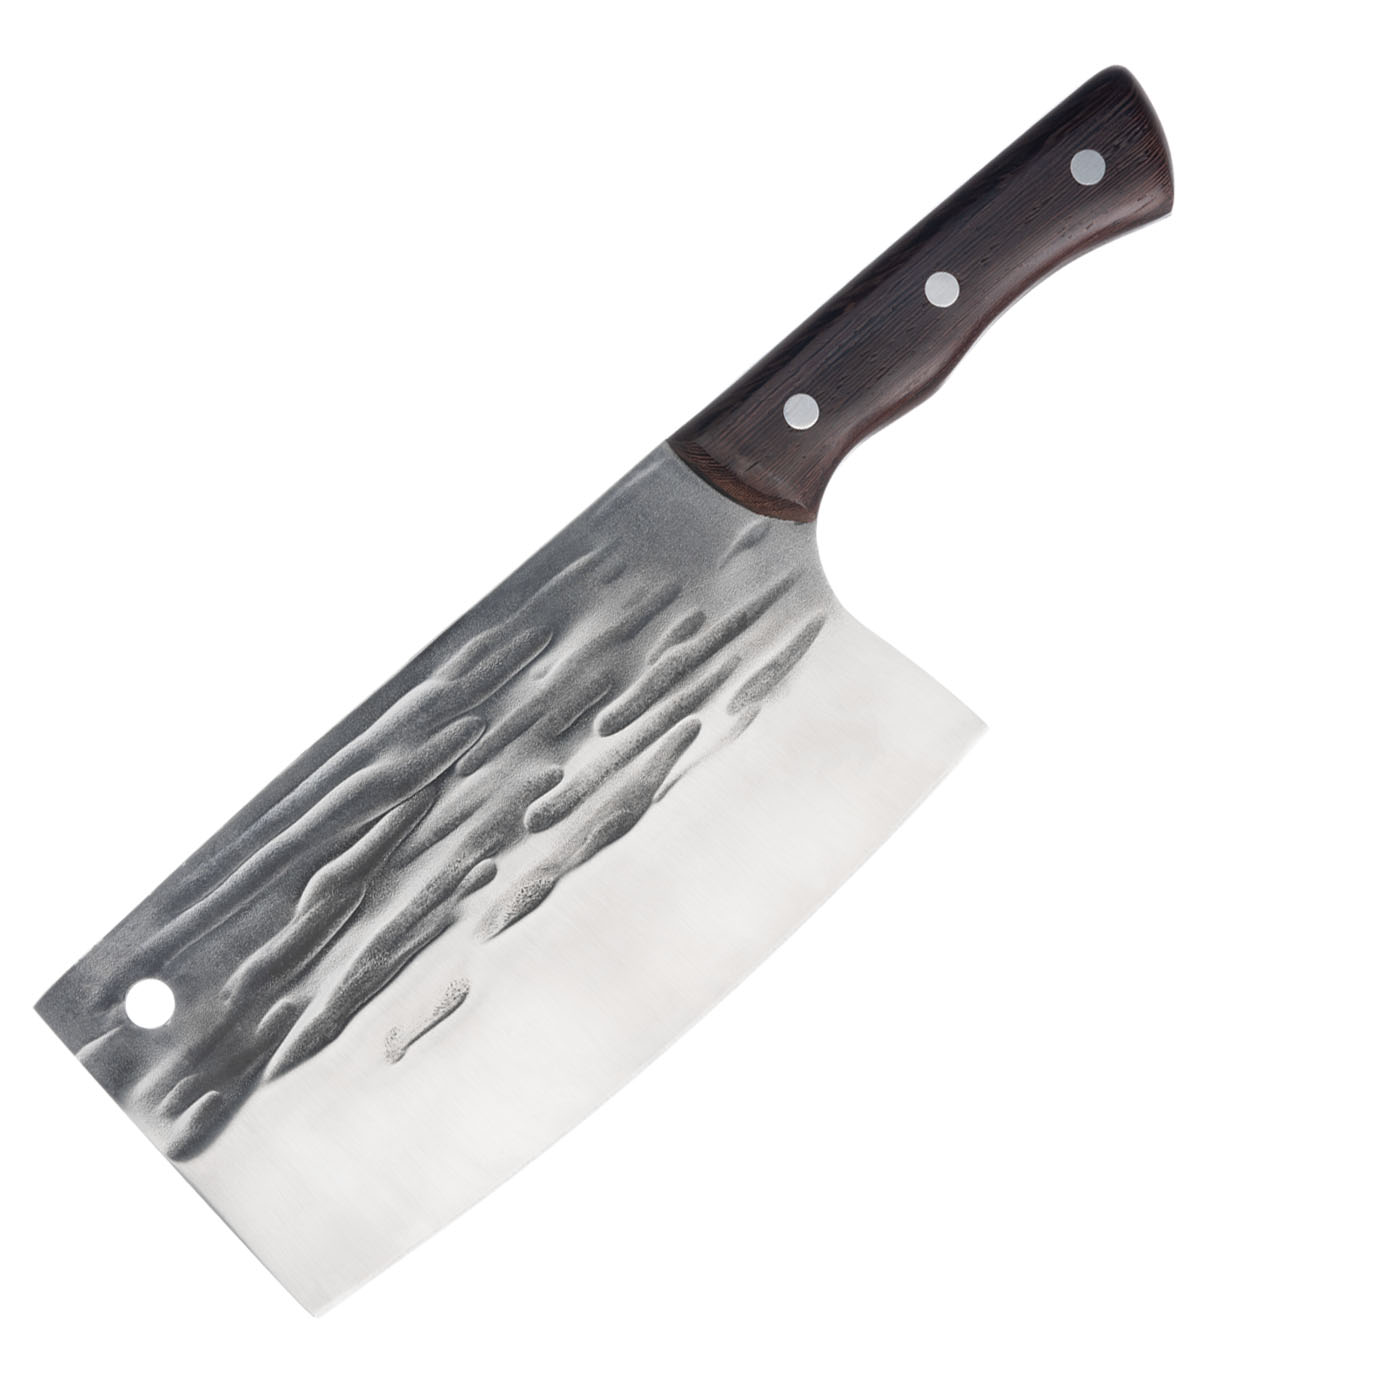 Paofu 8" Full Tang Curved Butcher Knife